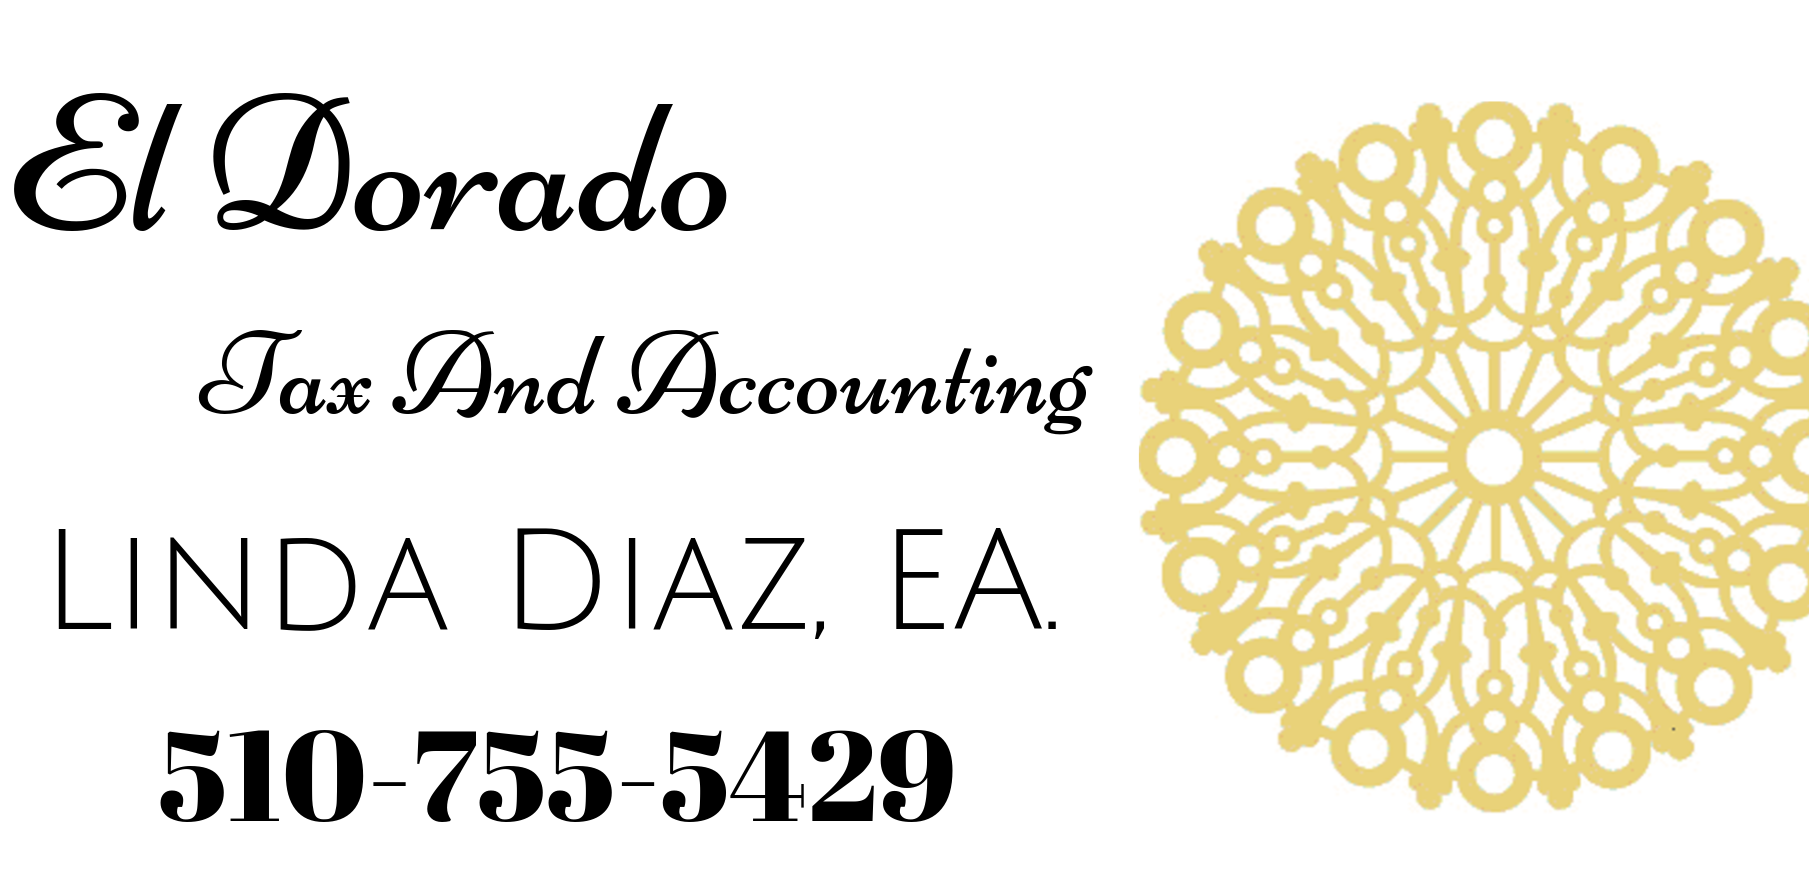 El Dorado Tax and Accounting, Manteca California